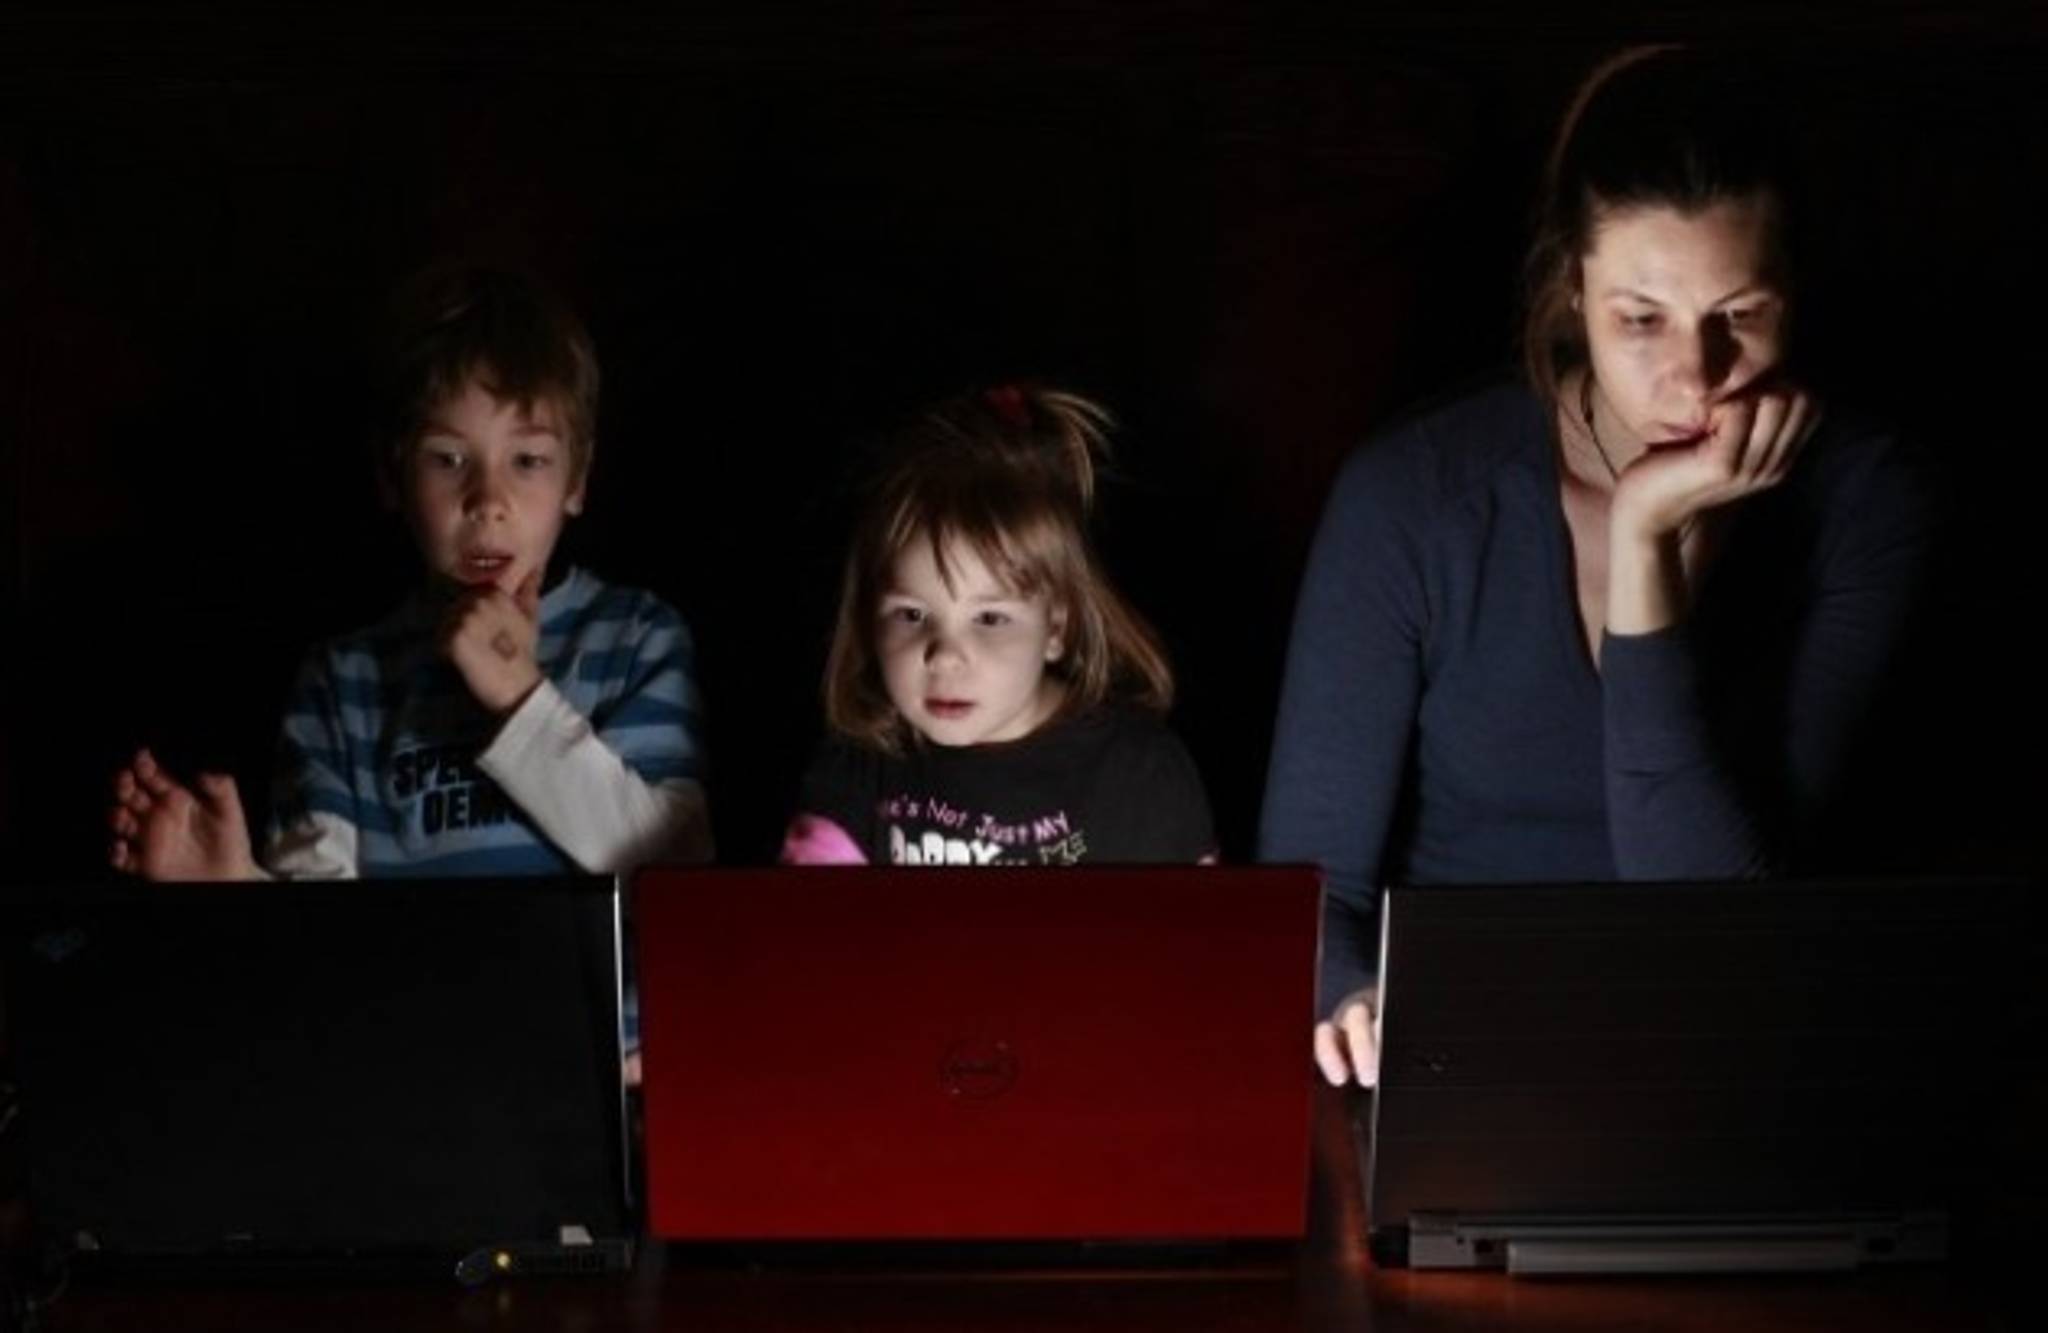 Is digital dividing families?